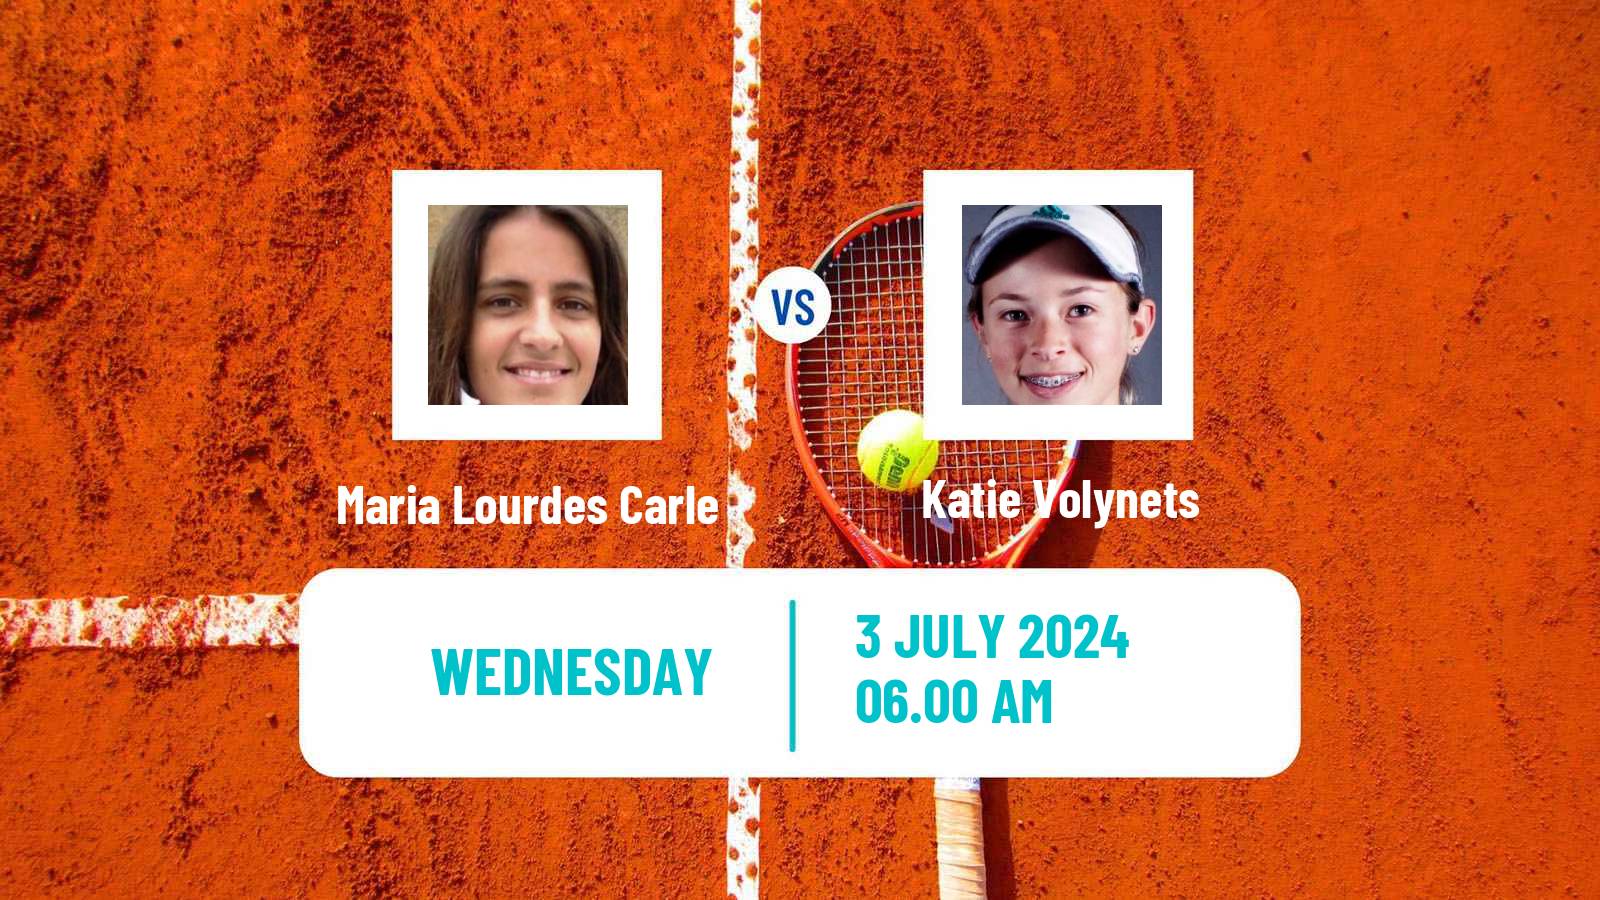 Tennis WTA Wimbledon Maria Lourdes Carle - Katie Volynets